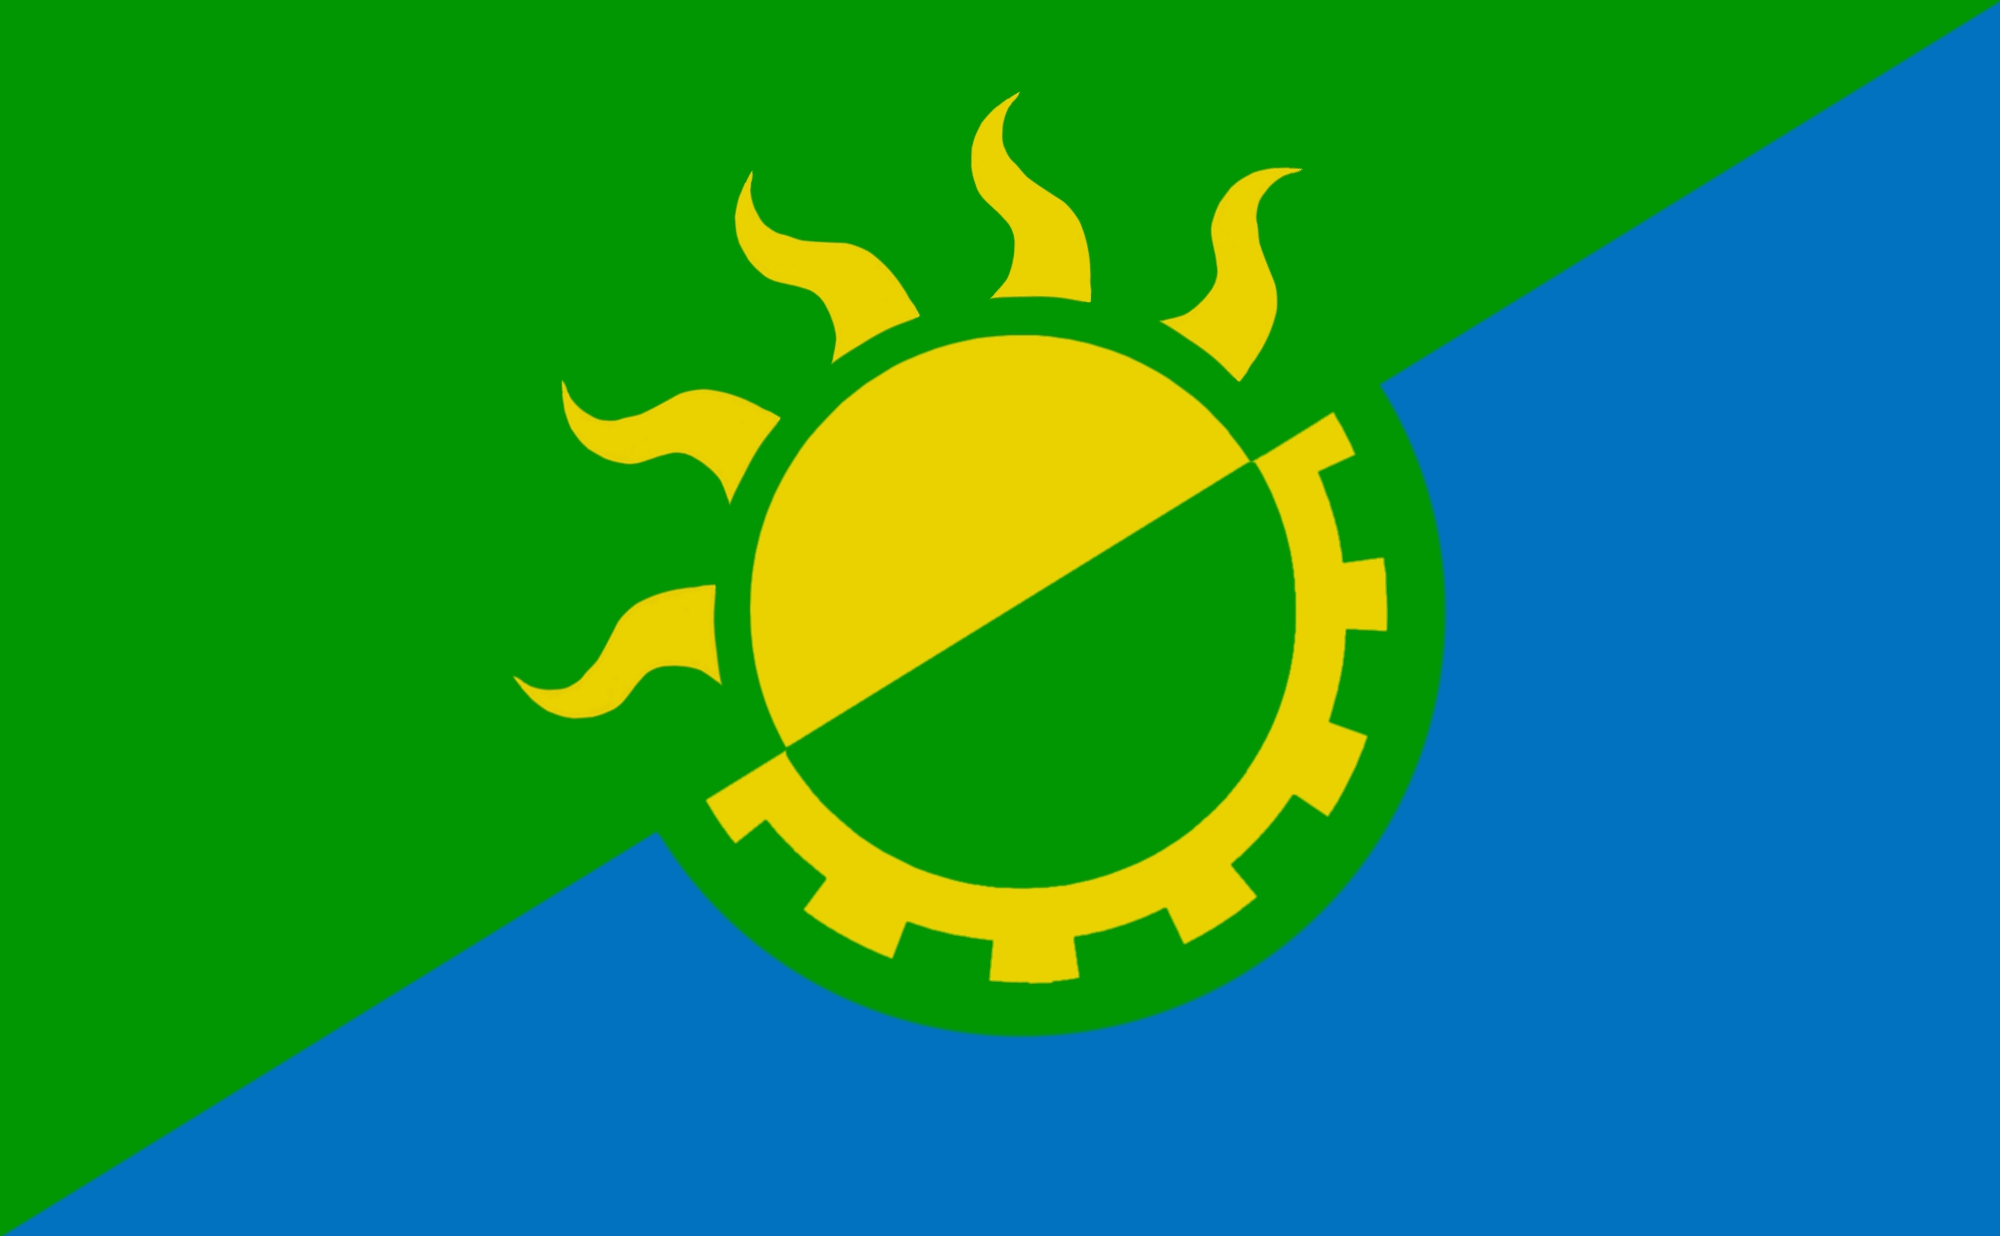 solarpunk - Wikidata